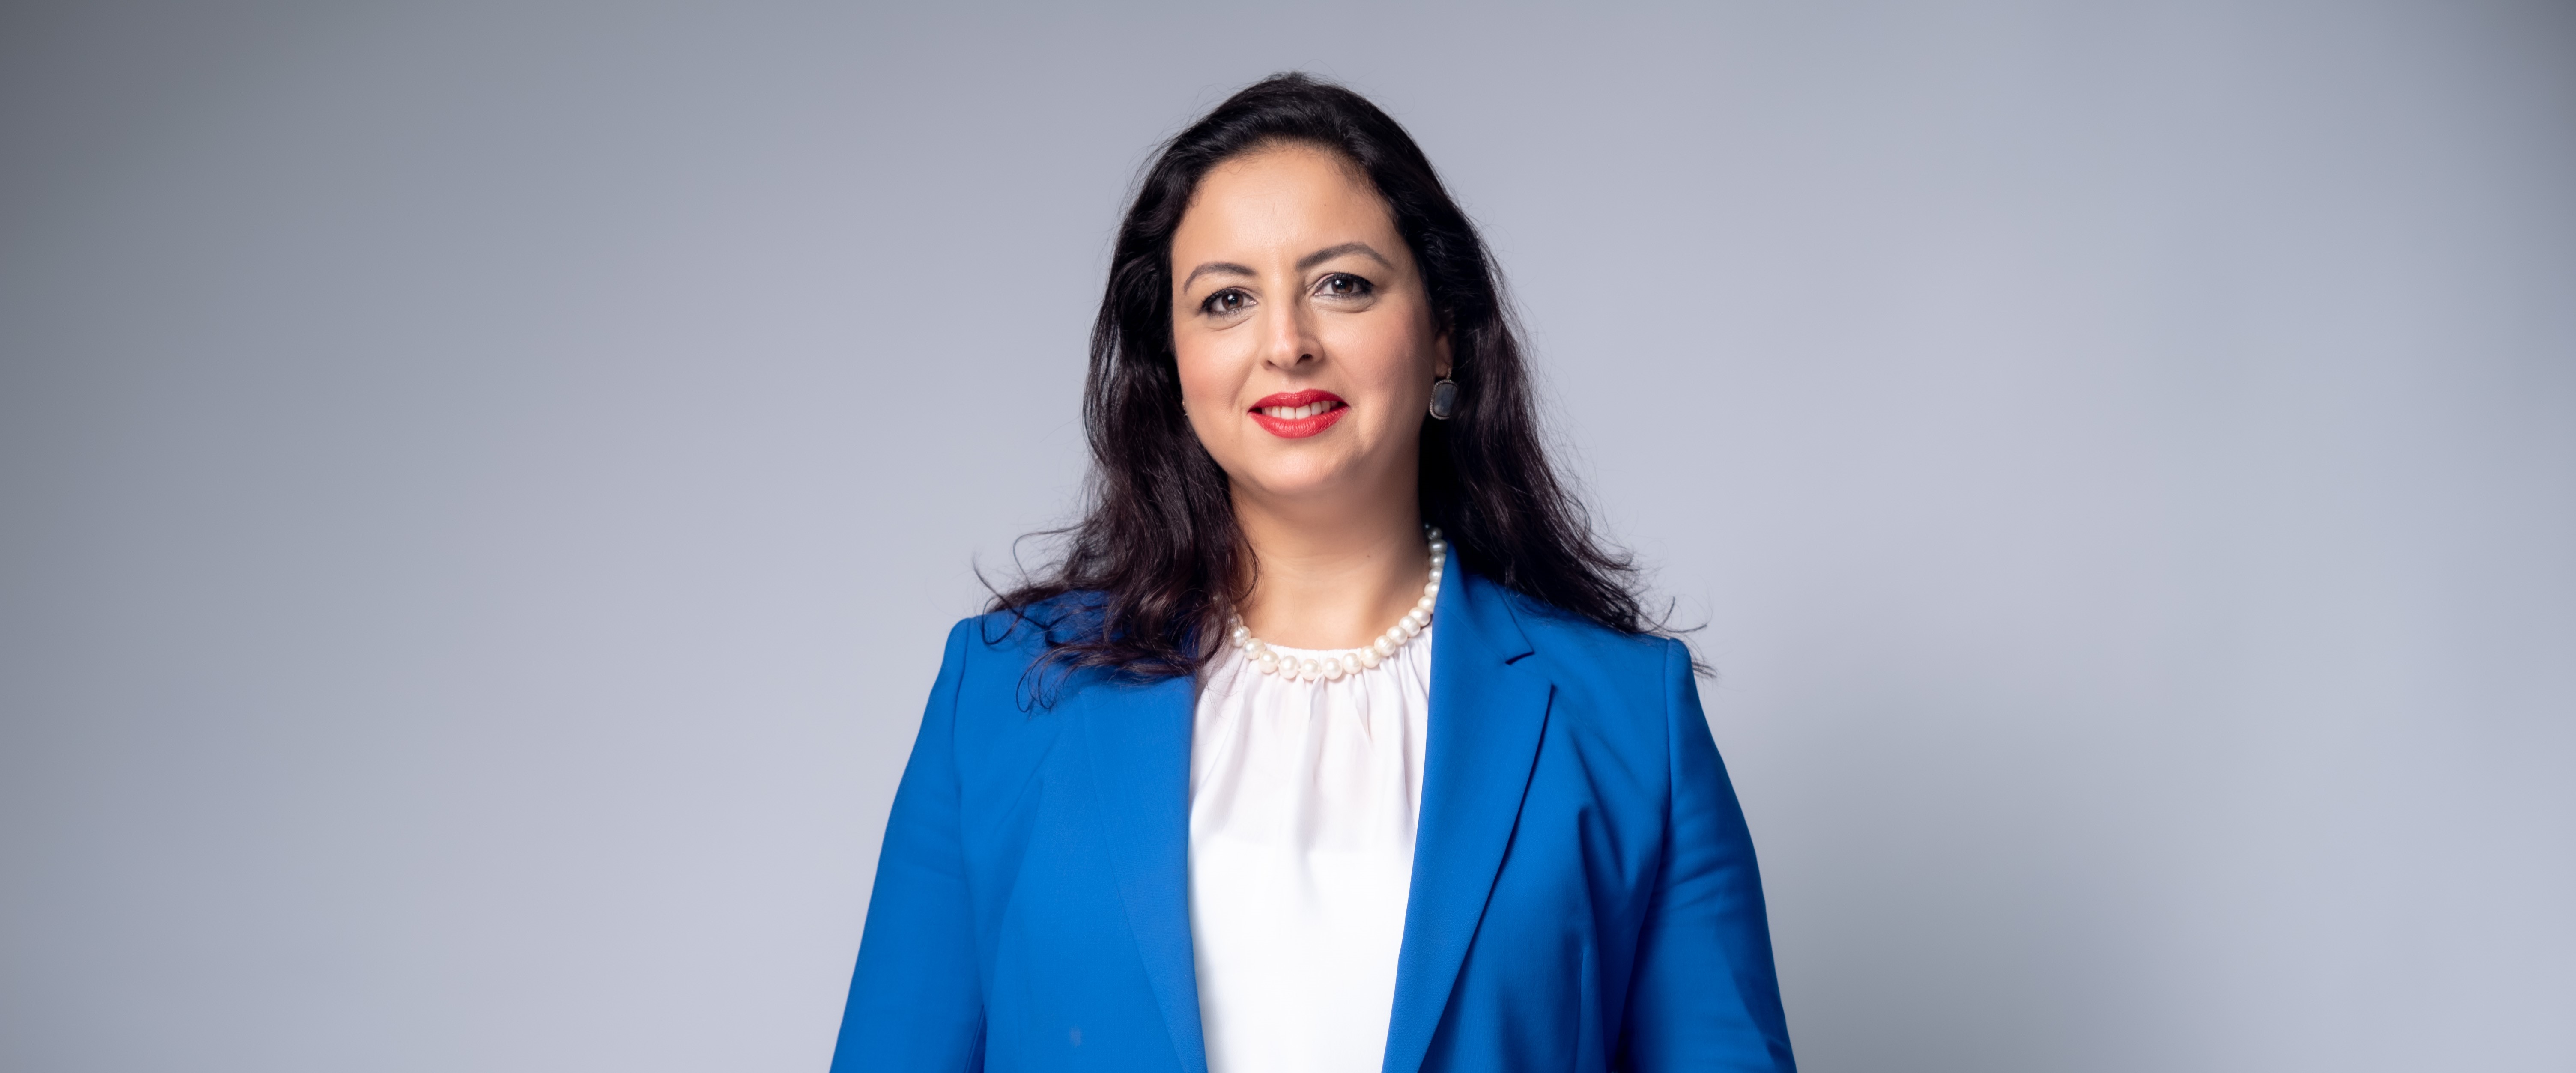 Asma Charki nommée à la tête de l’IFA Maroc